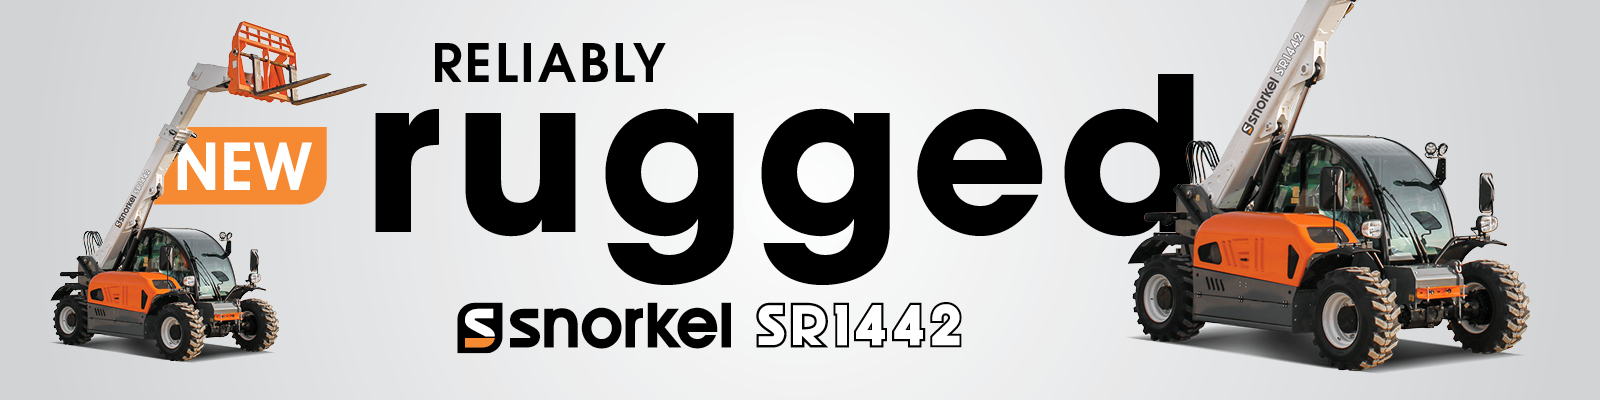 Snorkel SR1442 - Reliably Rugged